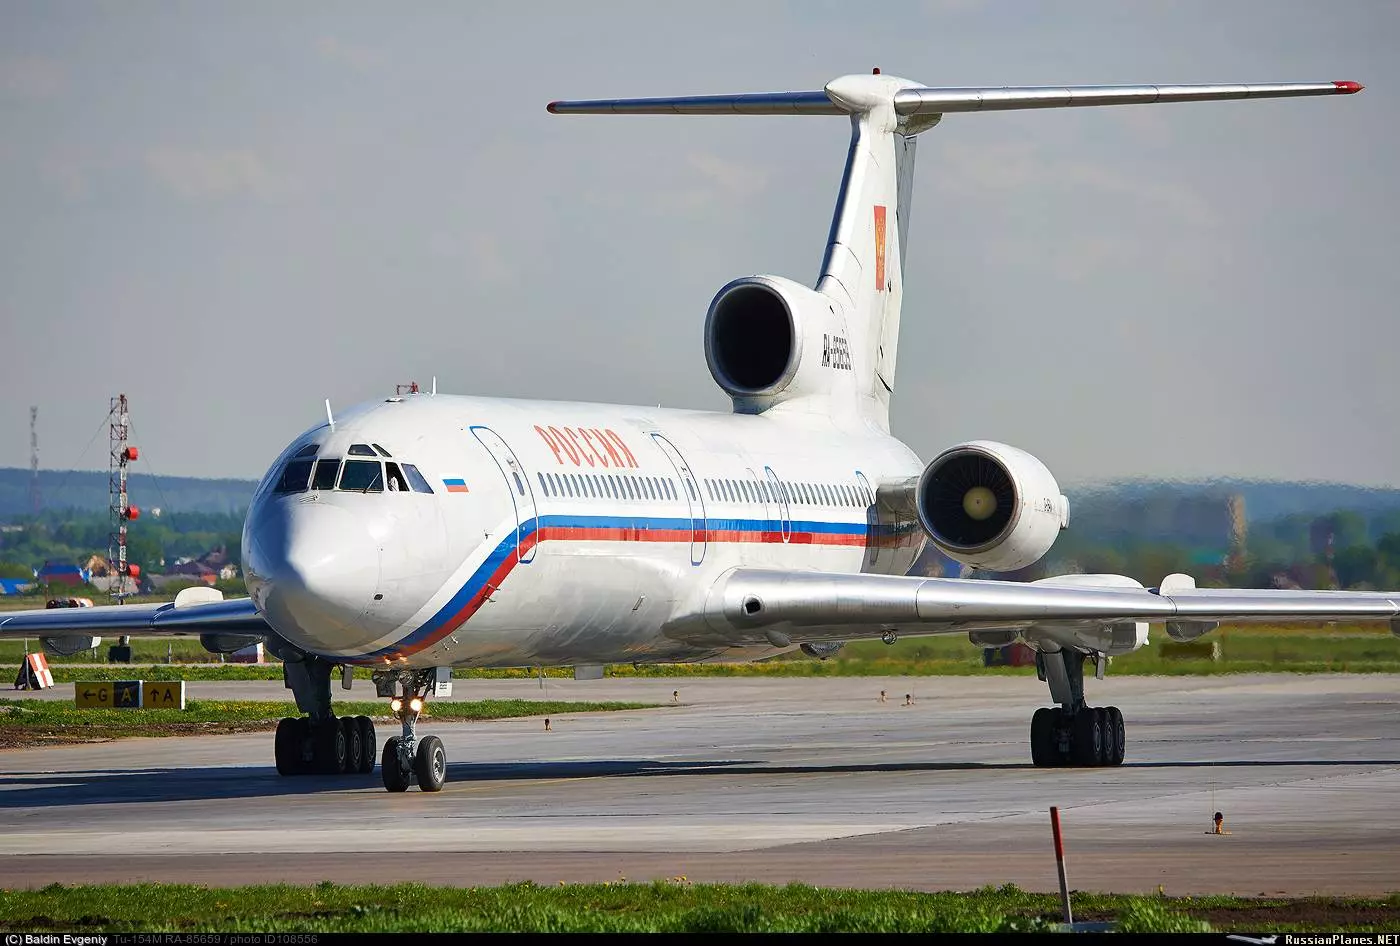 Ту-154 - фото, видео, характеристики самолета ту-154